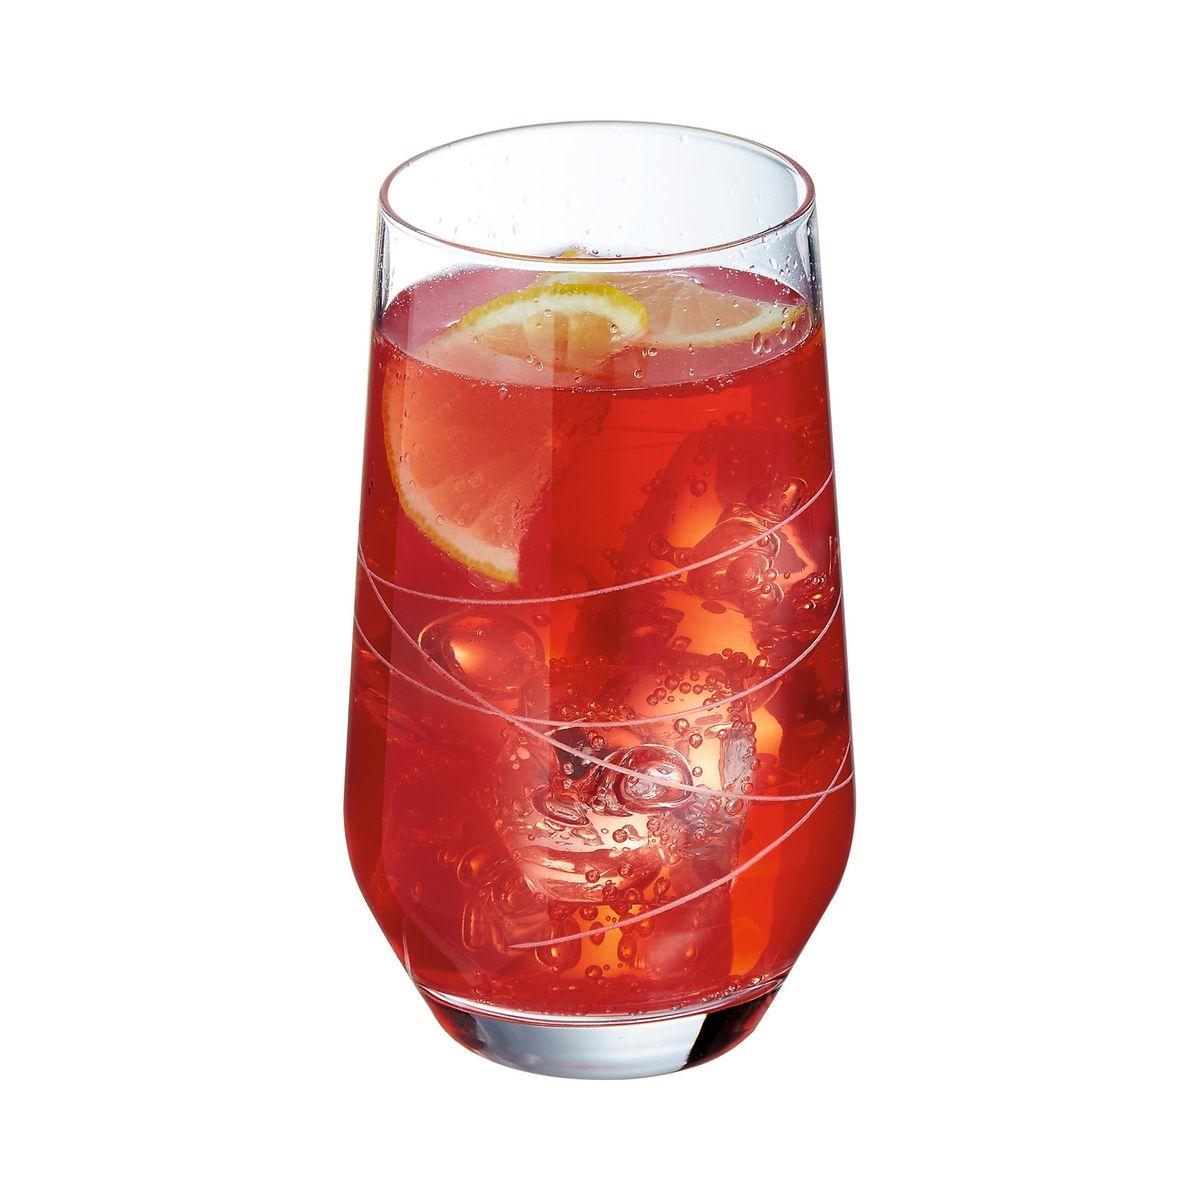 6 verres 40cl Abstraction - Cristal d'Arques - Verre ultra transparent moderne